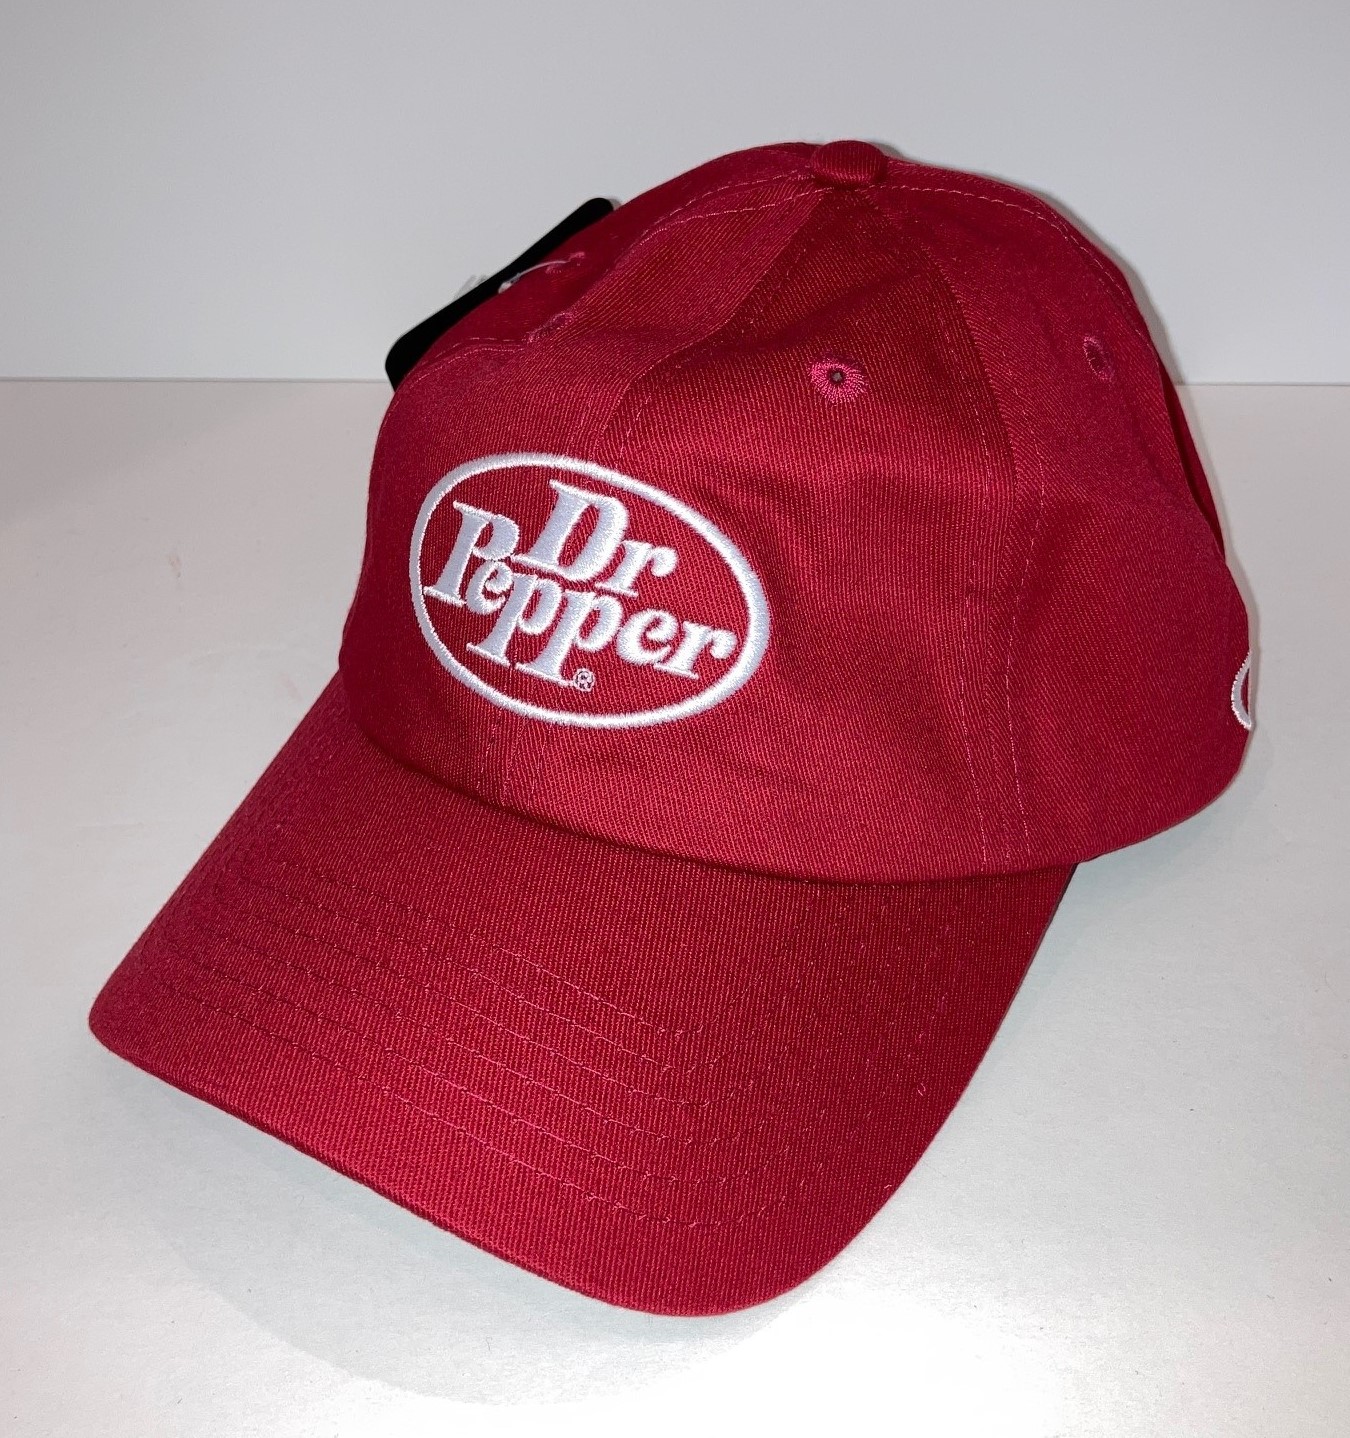 Dr Pepper Cap  Texas Star Trading